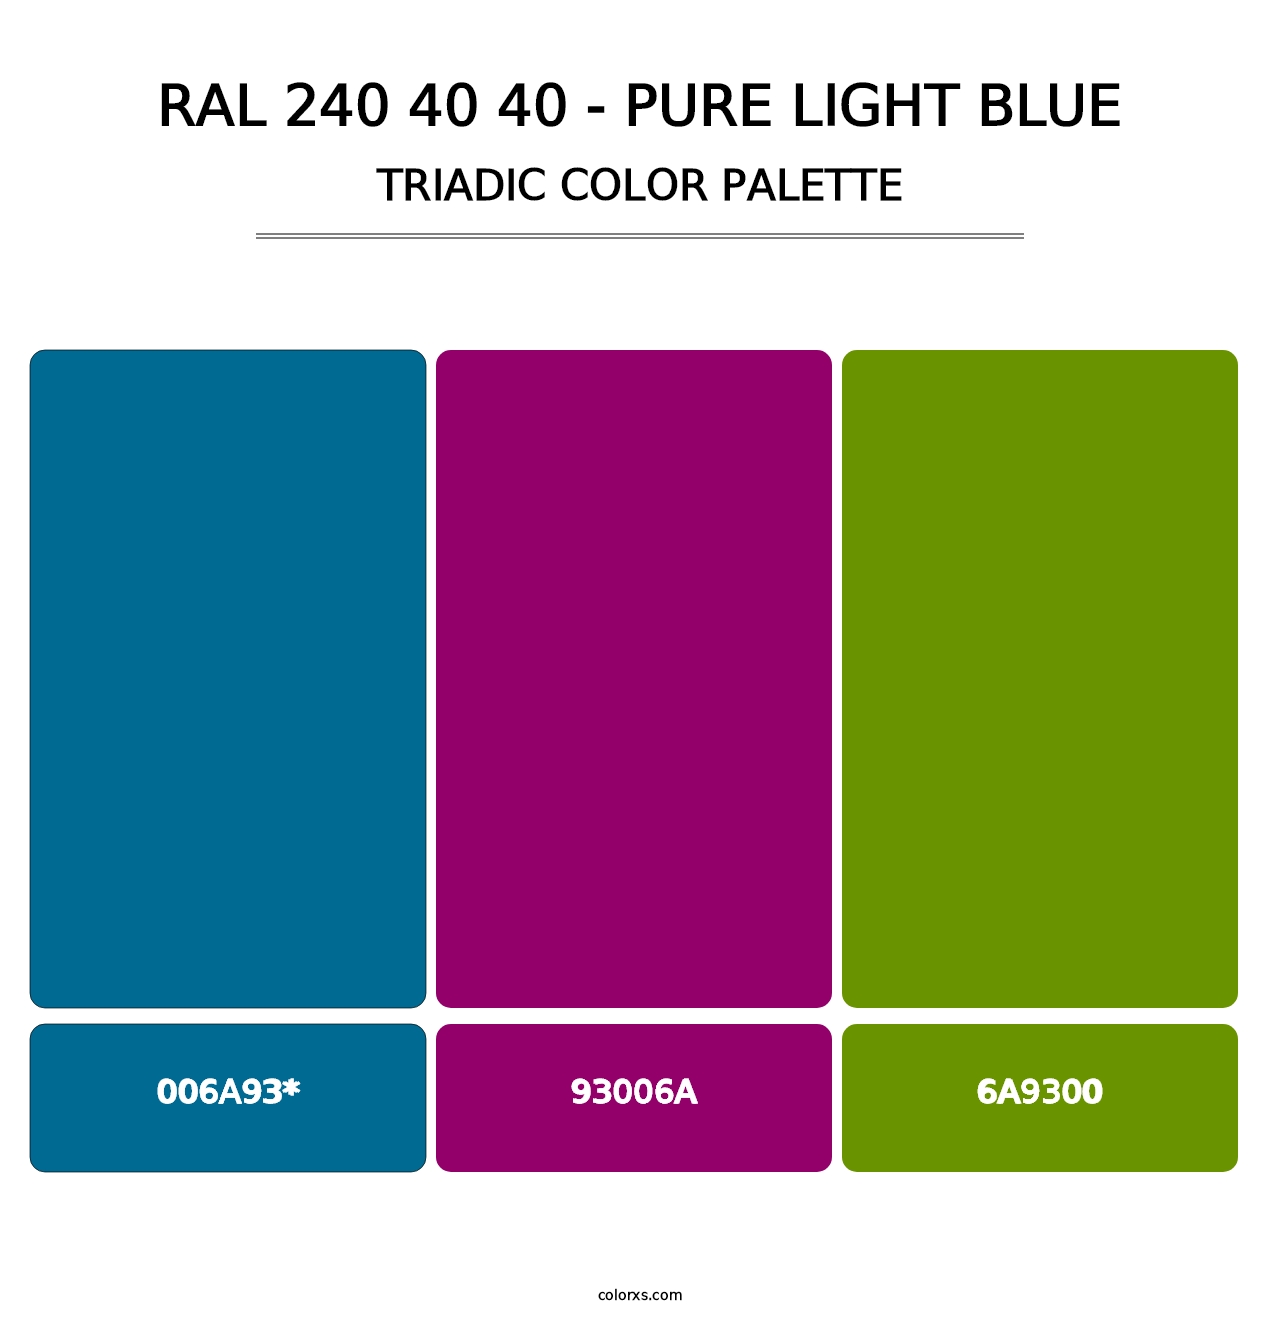 RAL 240 40 40 - Pure Light Blue - Triadic Color Palette